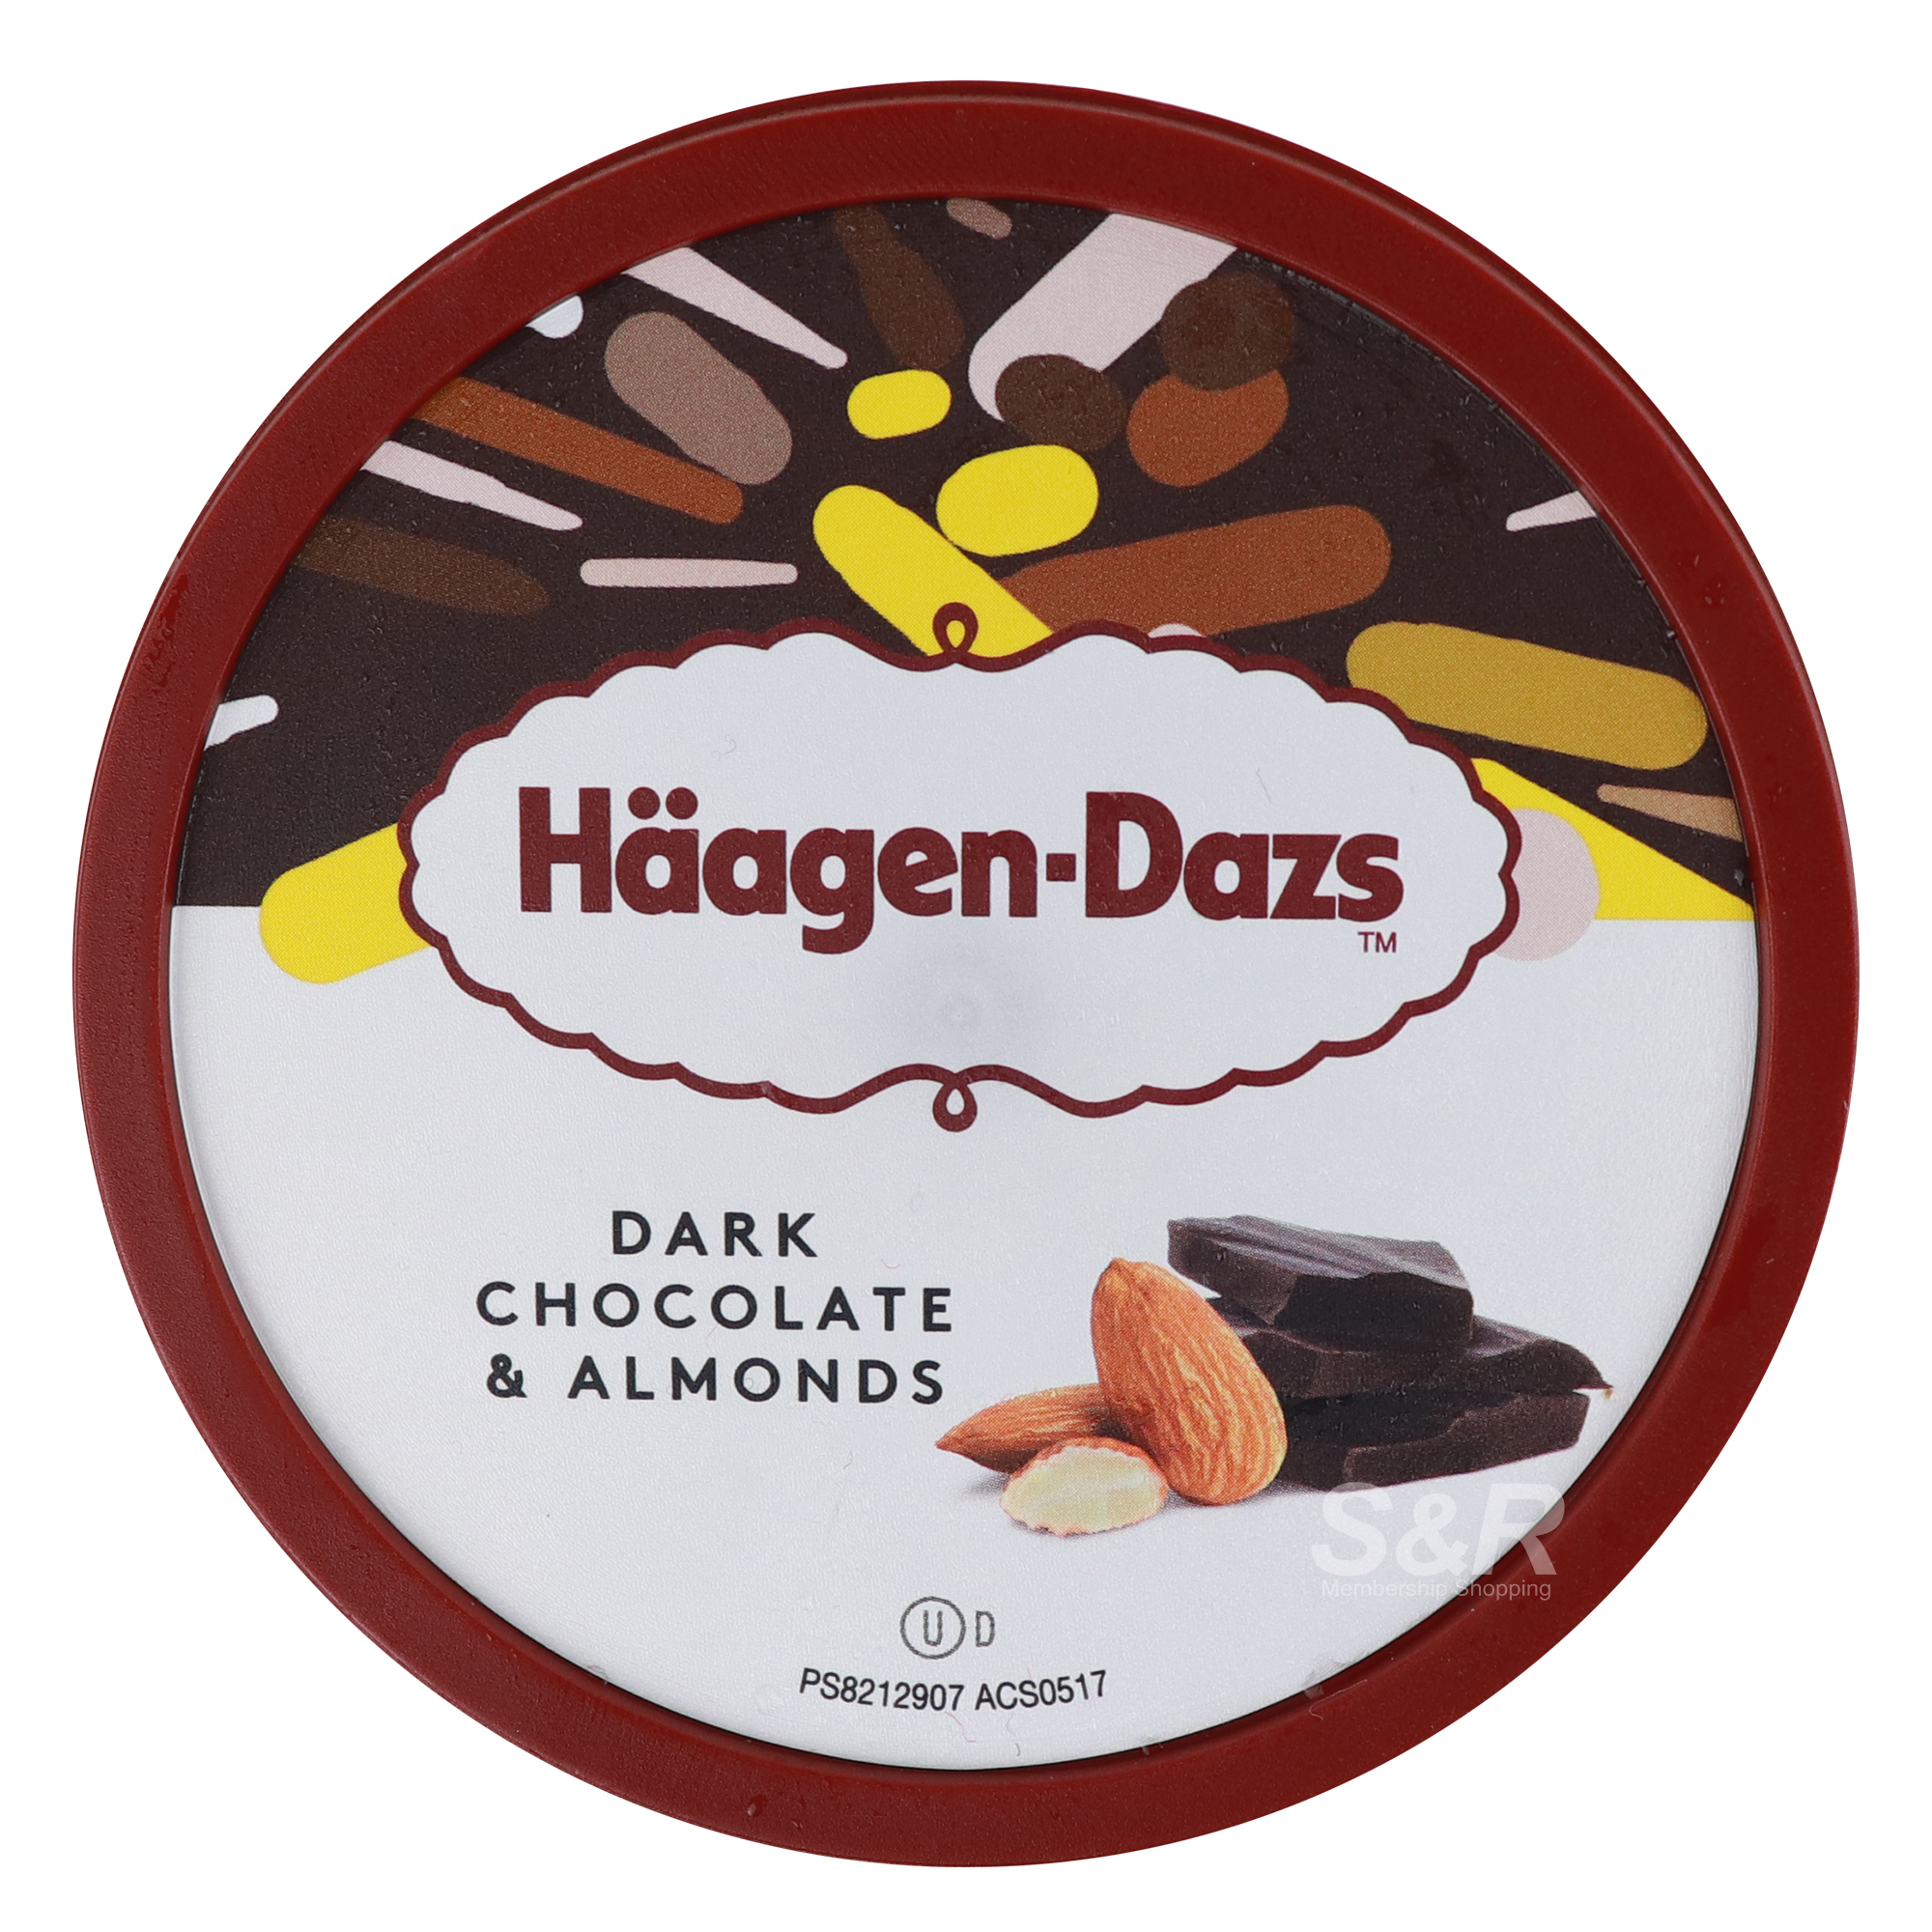 Dark Chocolate & Almonds Ice Cream